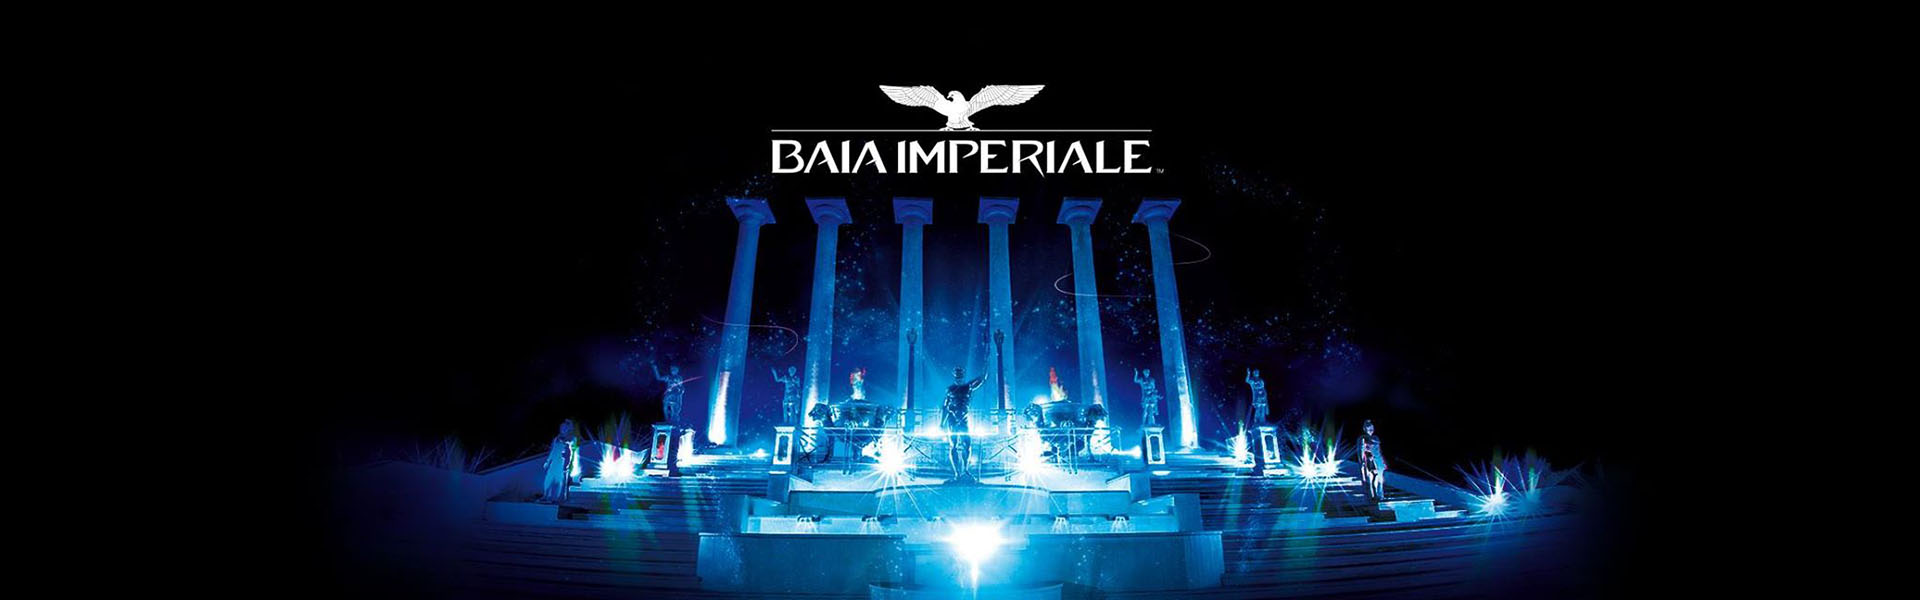 Discoteca Baia Imperiale, closing party Dj Night